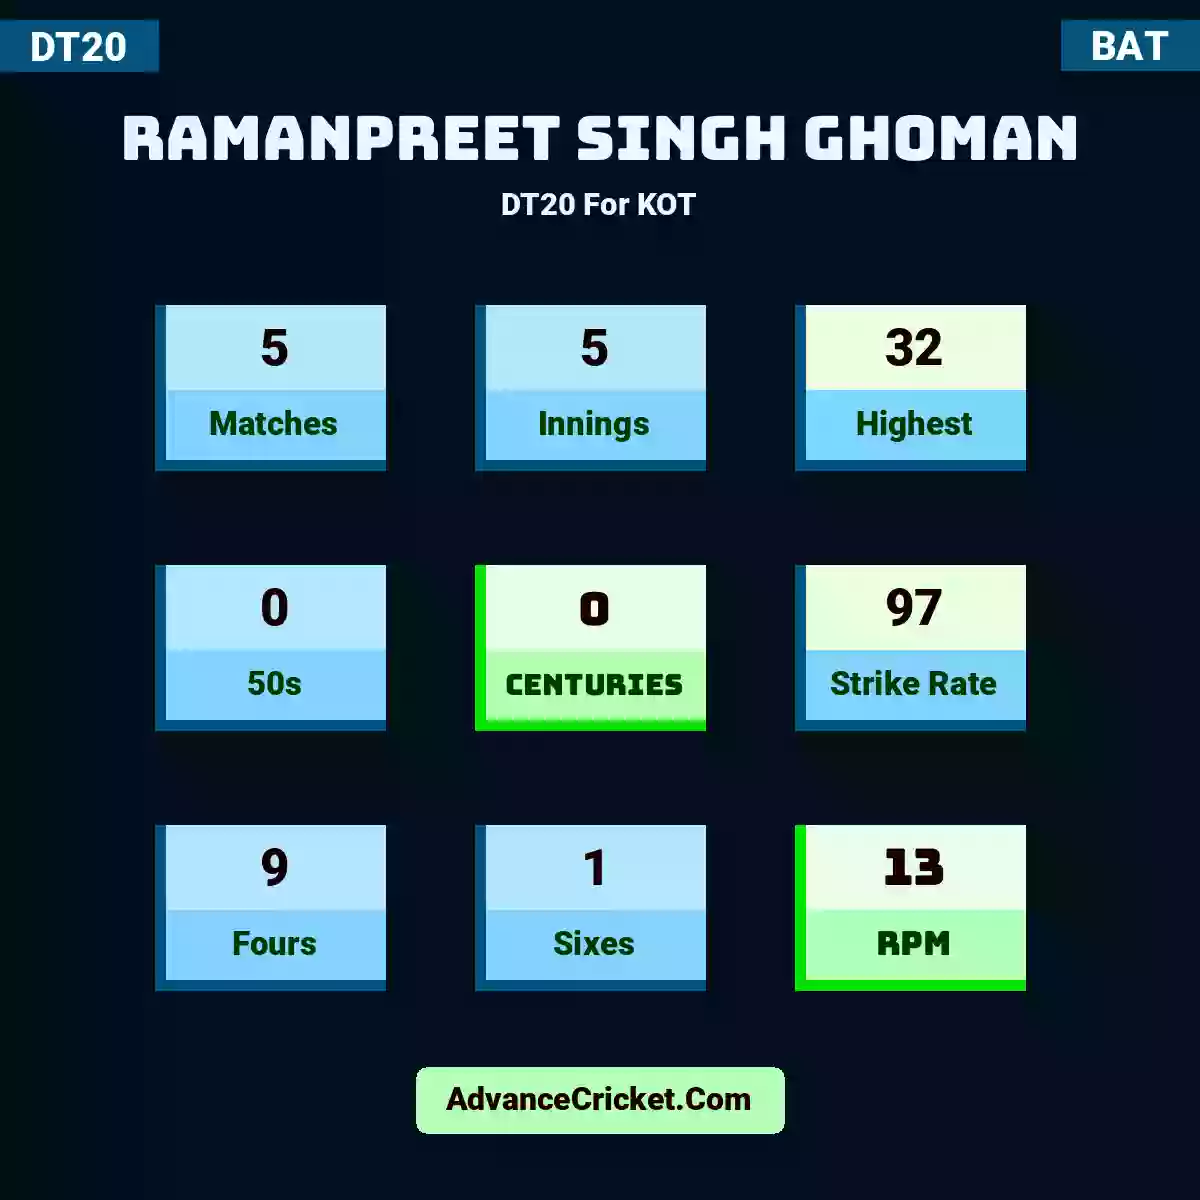 Ramanpreet Singh Ghoman DT20  For KOT, Ramanpreet Singh Ghoman played 5 matches, scored 32 runs as highest, 0 half-centuries, and 0 centuries, with a strike rate of 97. R.Singh.Ghoman hit 9 fours and 1 sixes, with an RPM of 13.